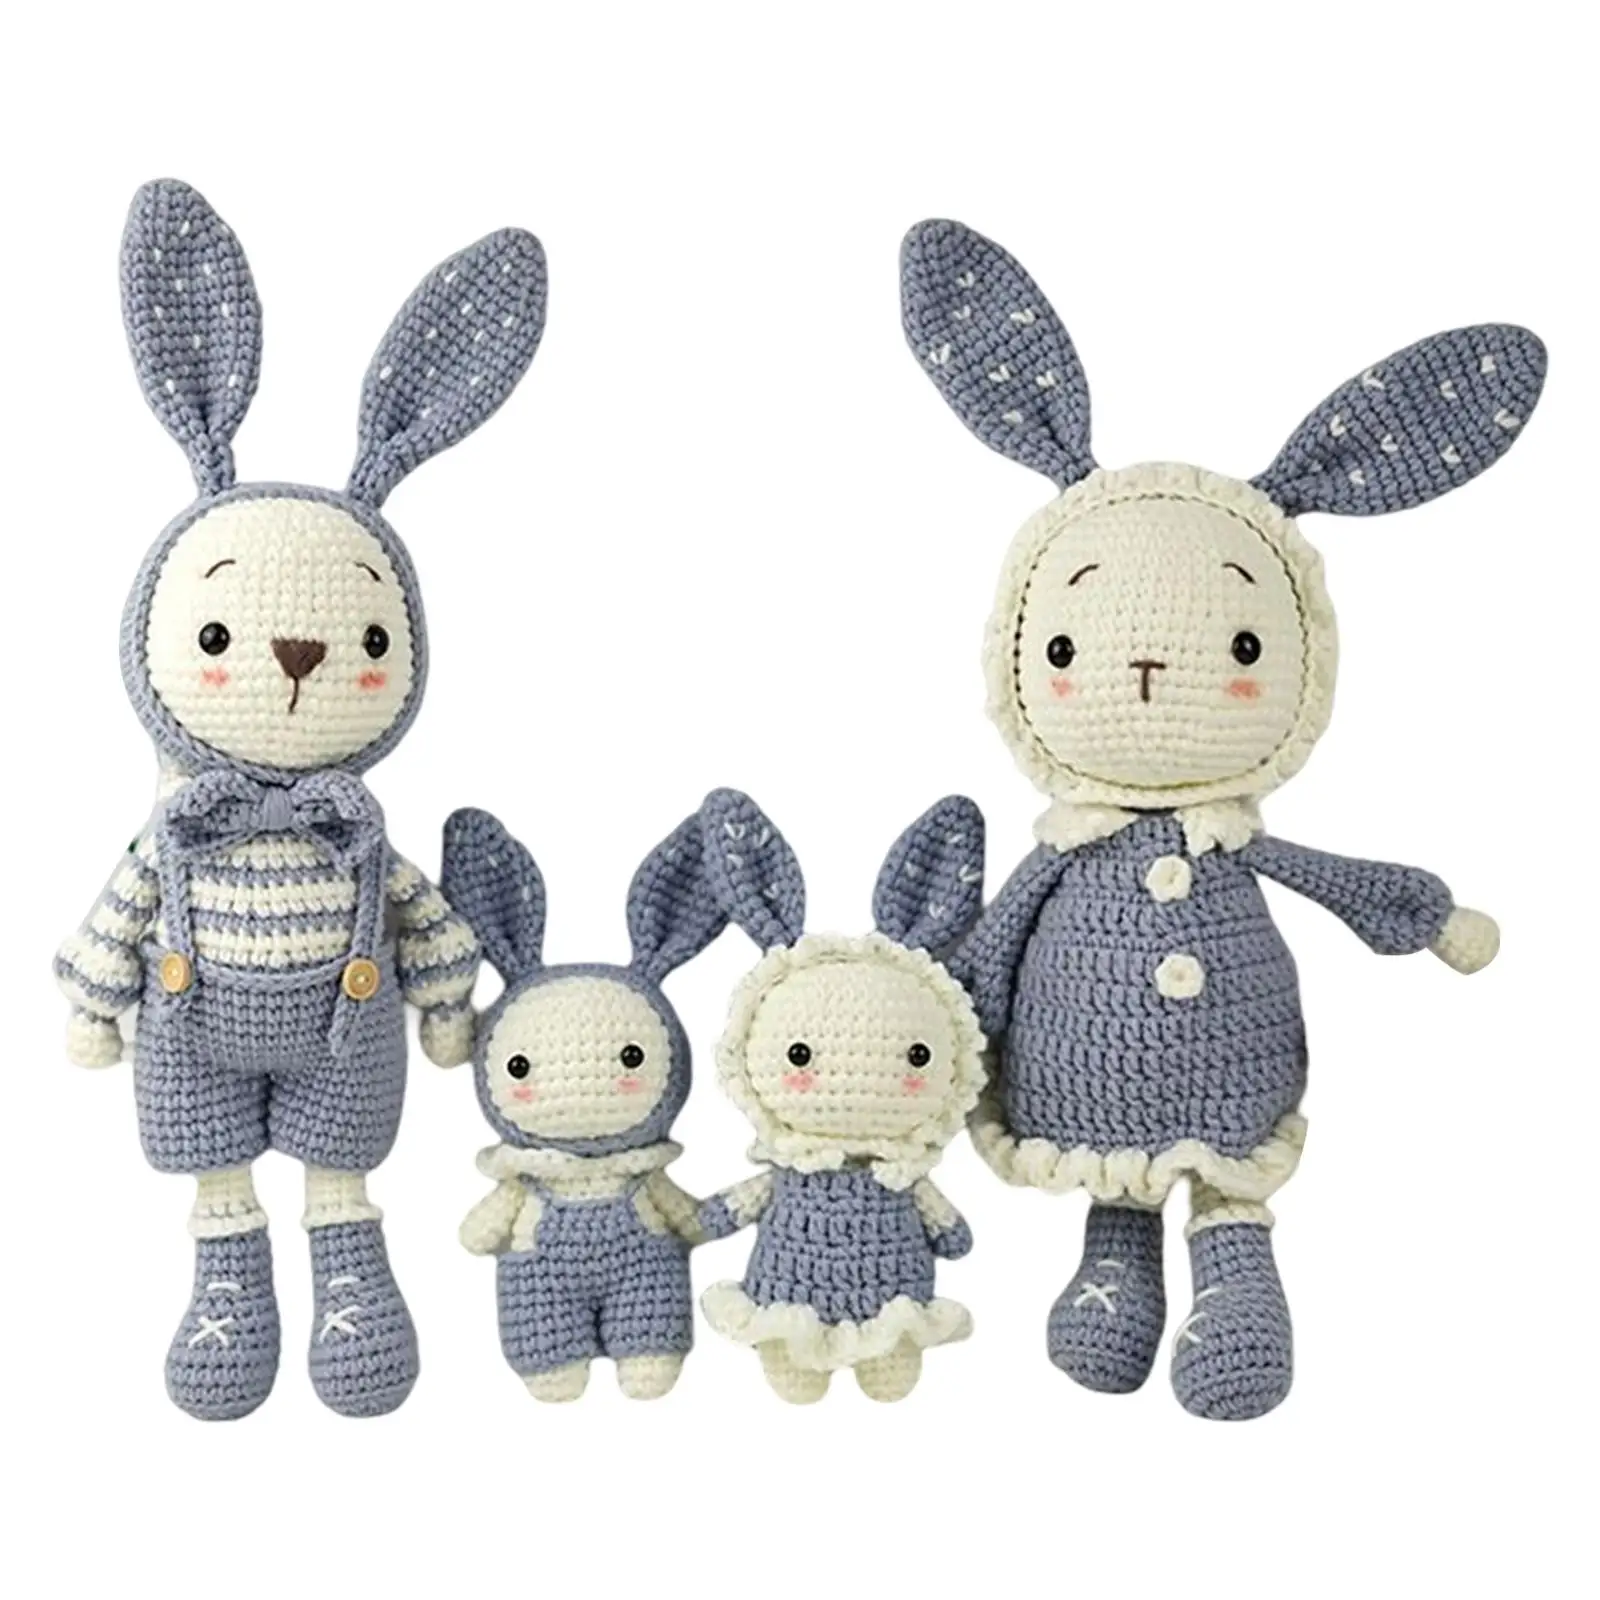 DIY Bunny Doll Crochet Set Starter Pack Craft Art for Beginners including Crochet Hook, Yarn Balls, Instructions, Accessories